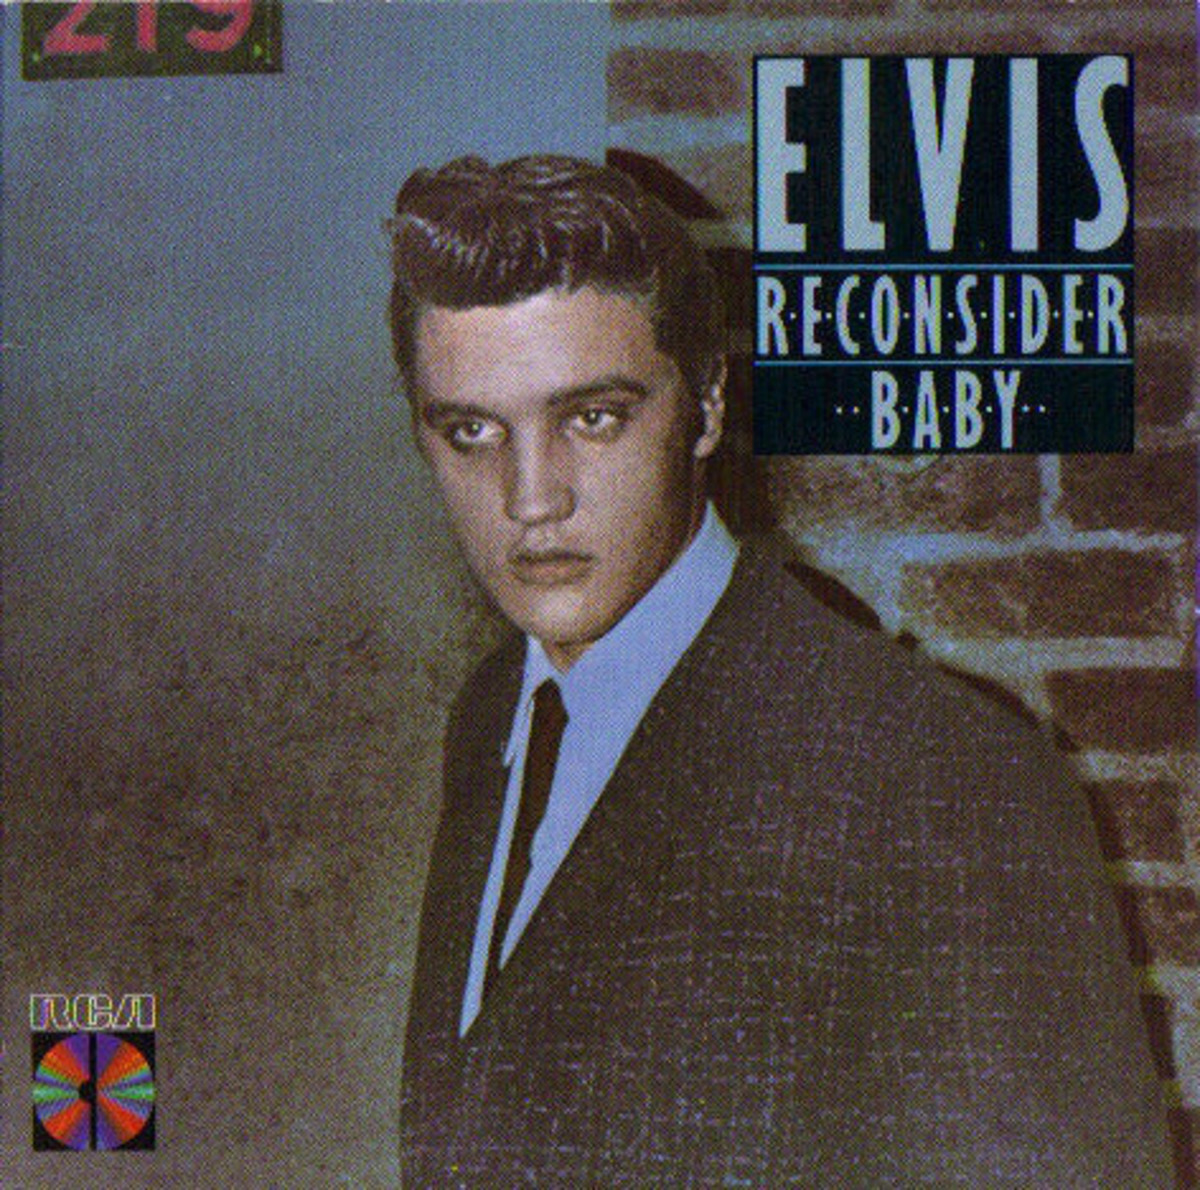 Elvis—Reconsider Baby